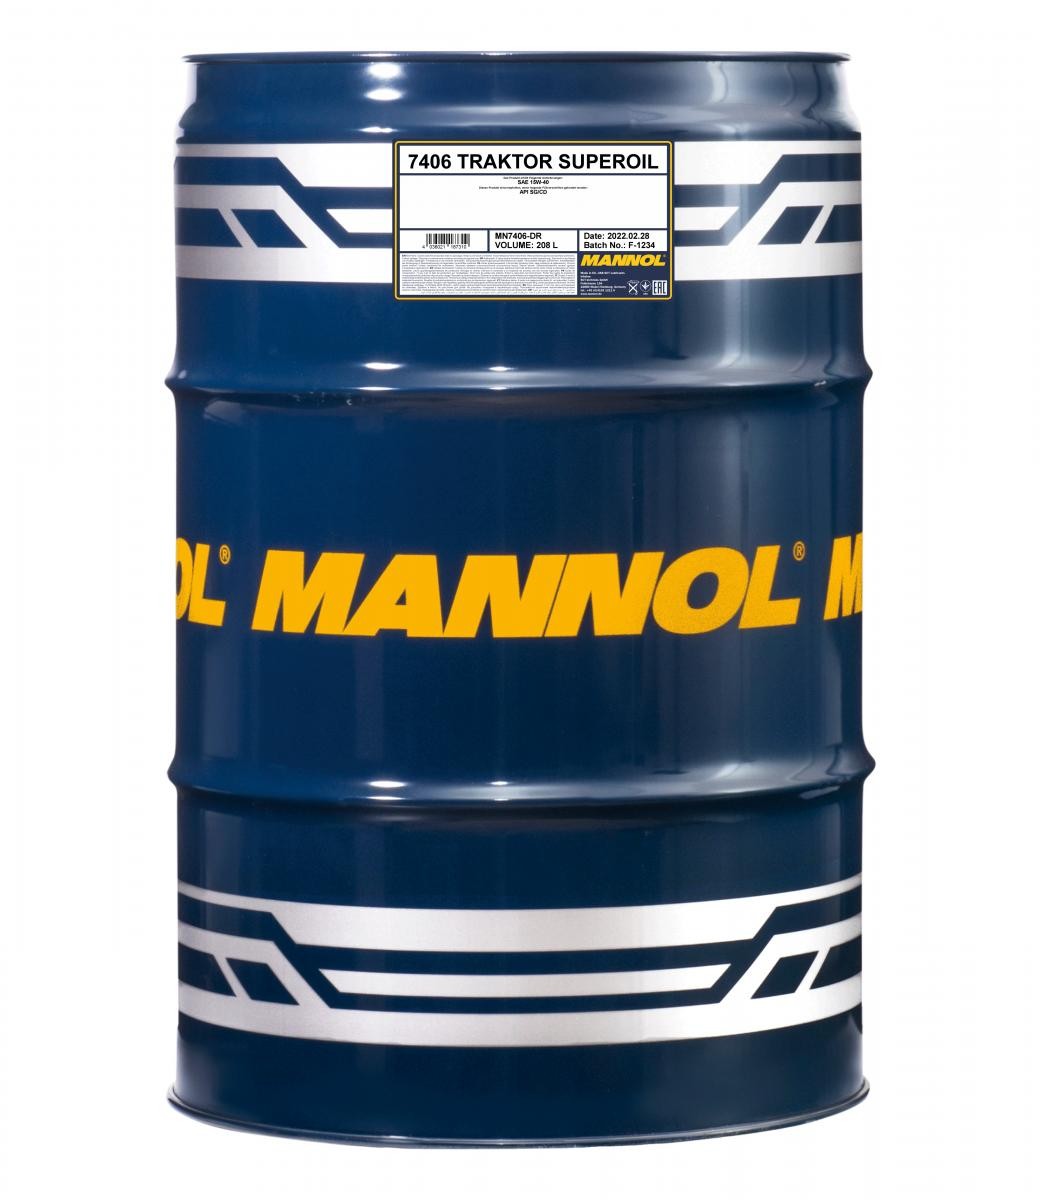 MANNOL Traktor, Superoil 15W-40, 208l, Mineralöl Motoröl MN7406-DR kaufen